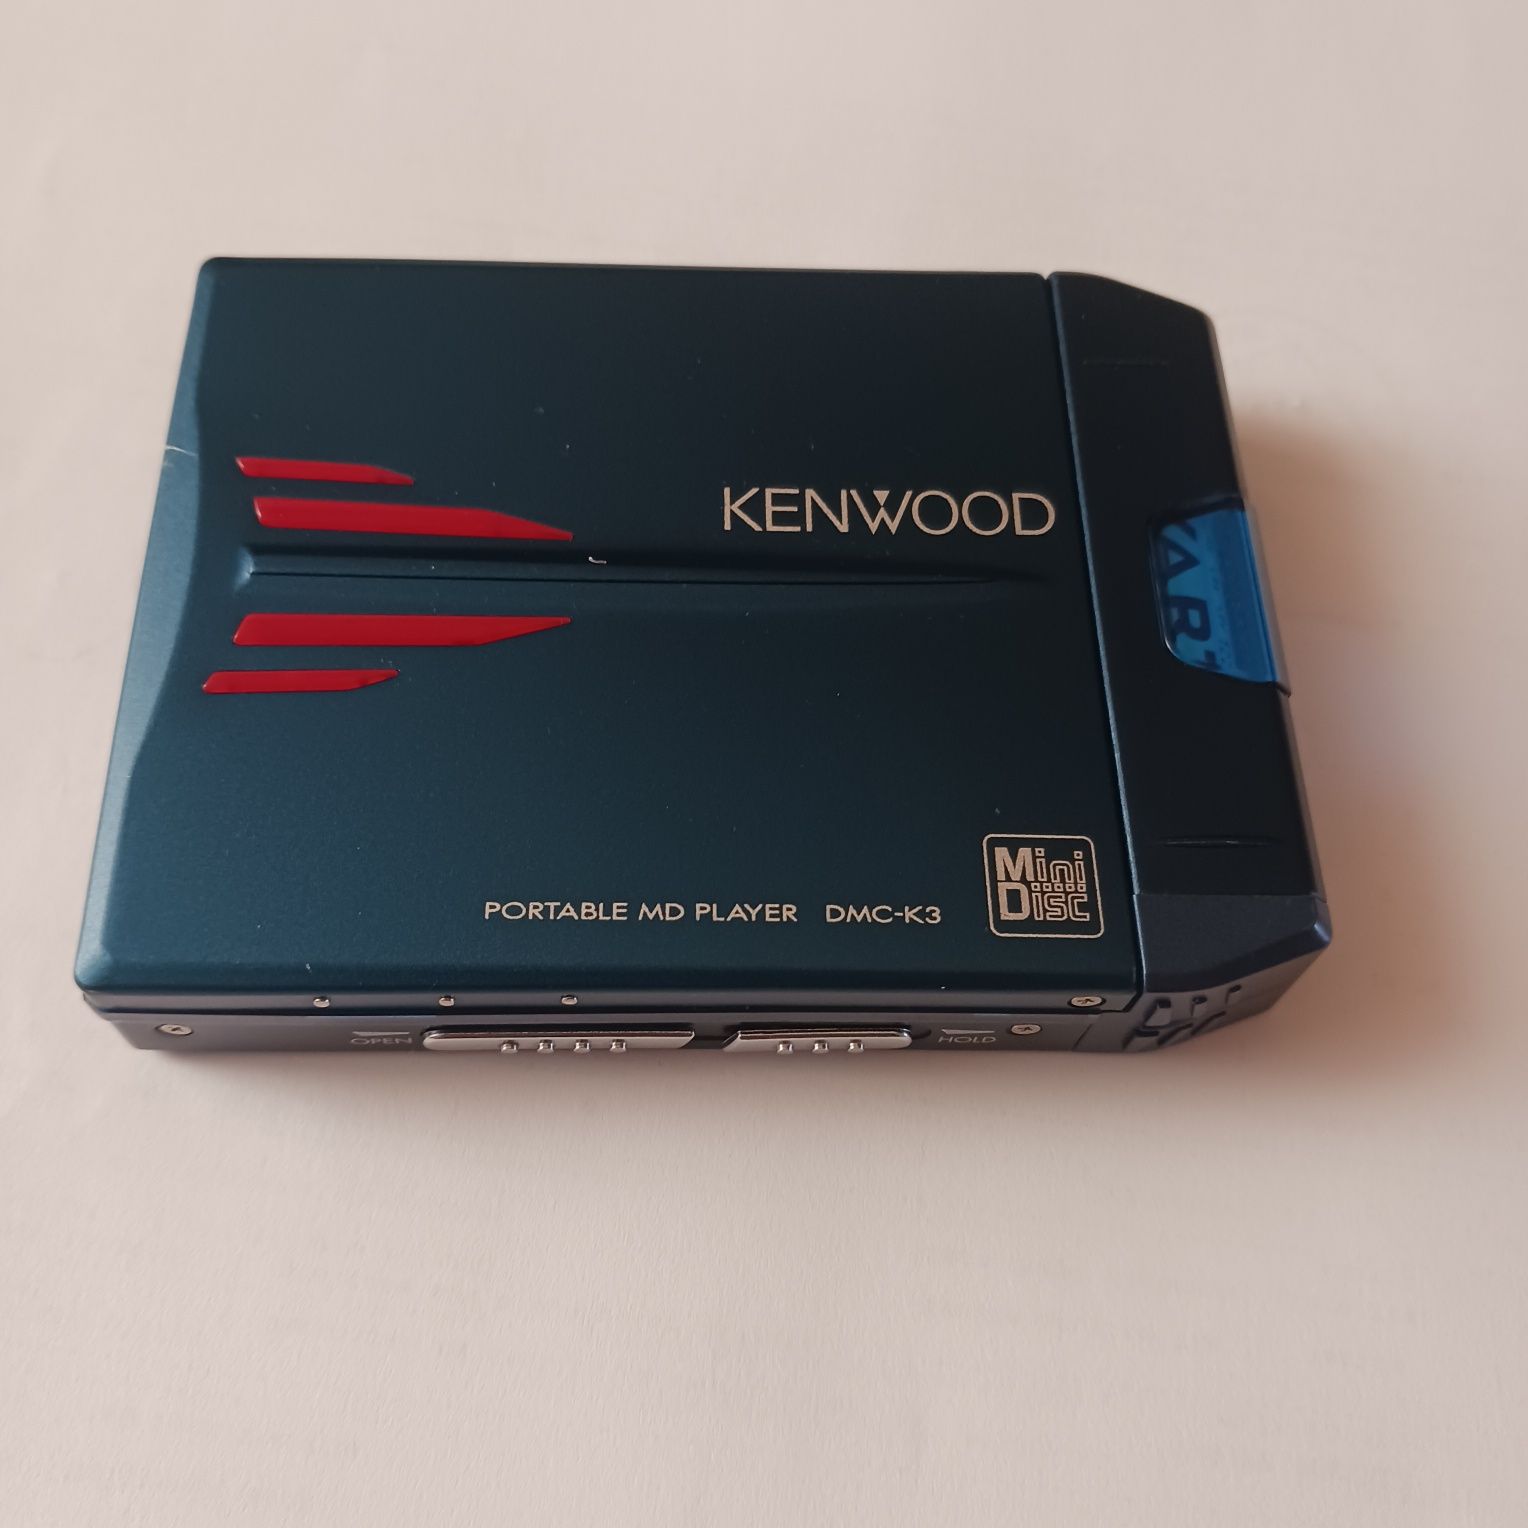 Mini disc kenwood